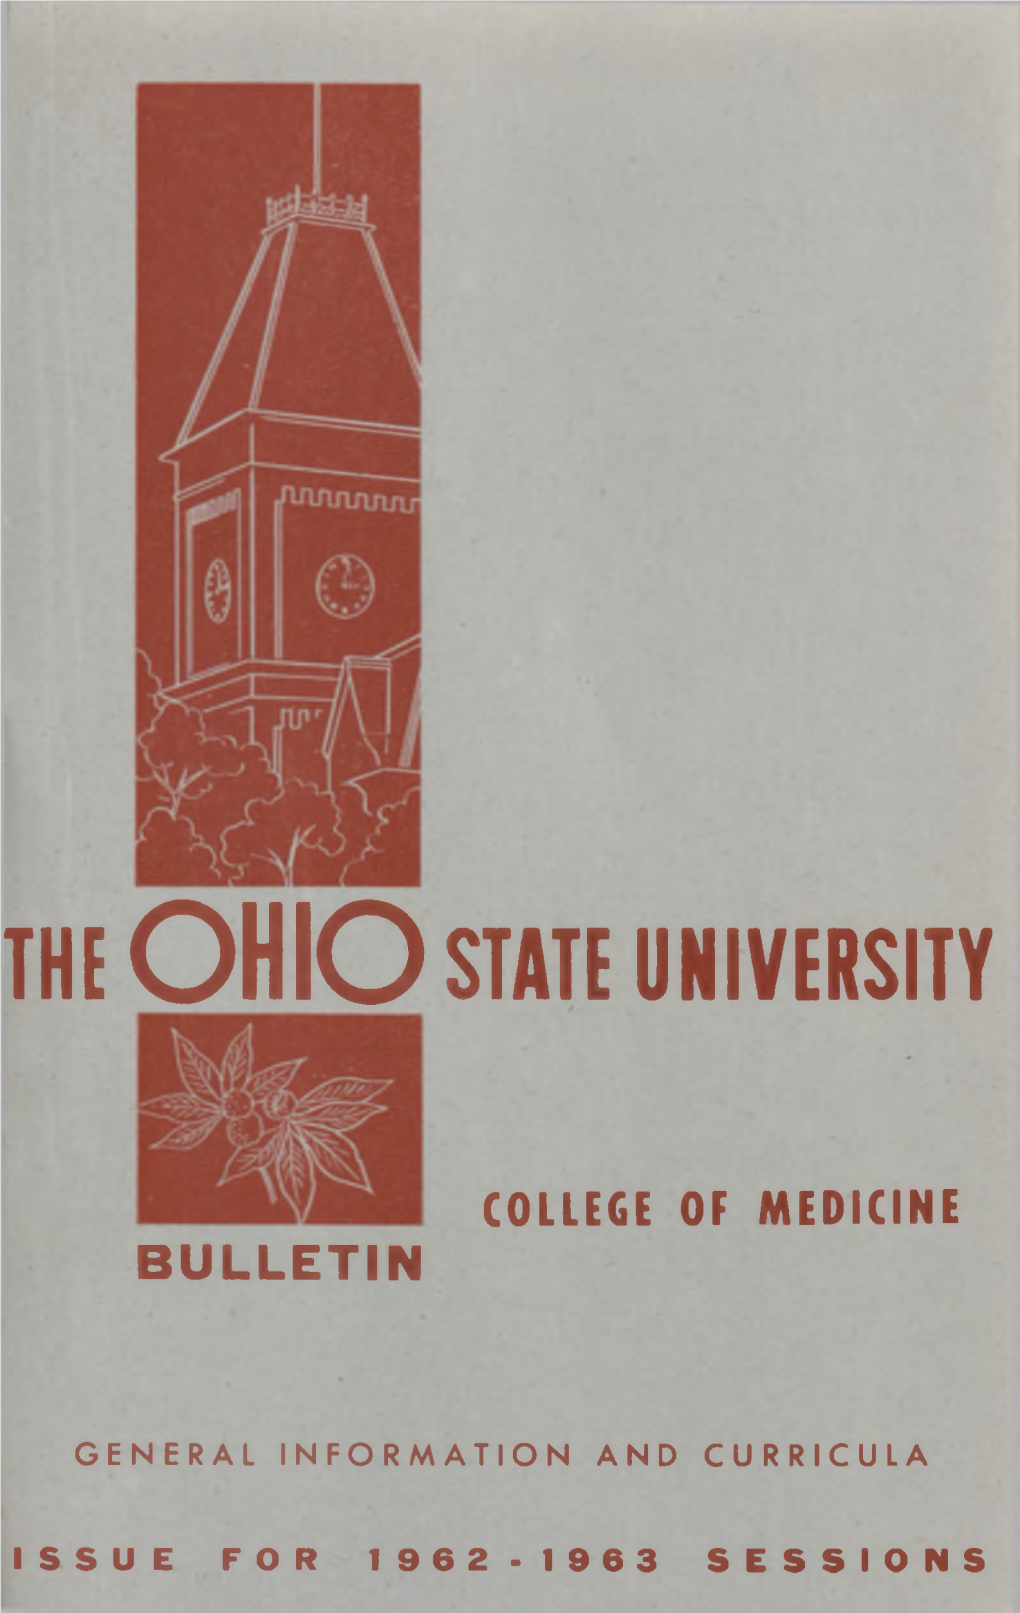 College of Medicine Bulletin